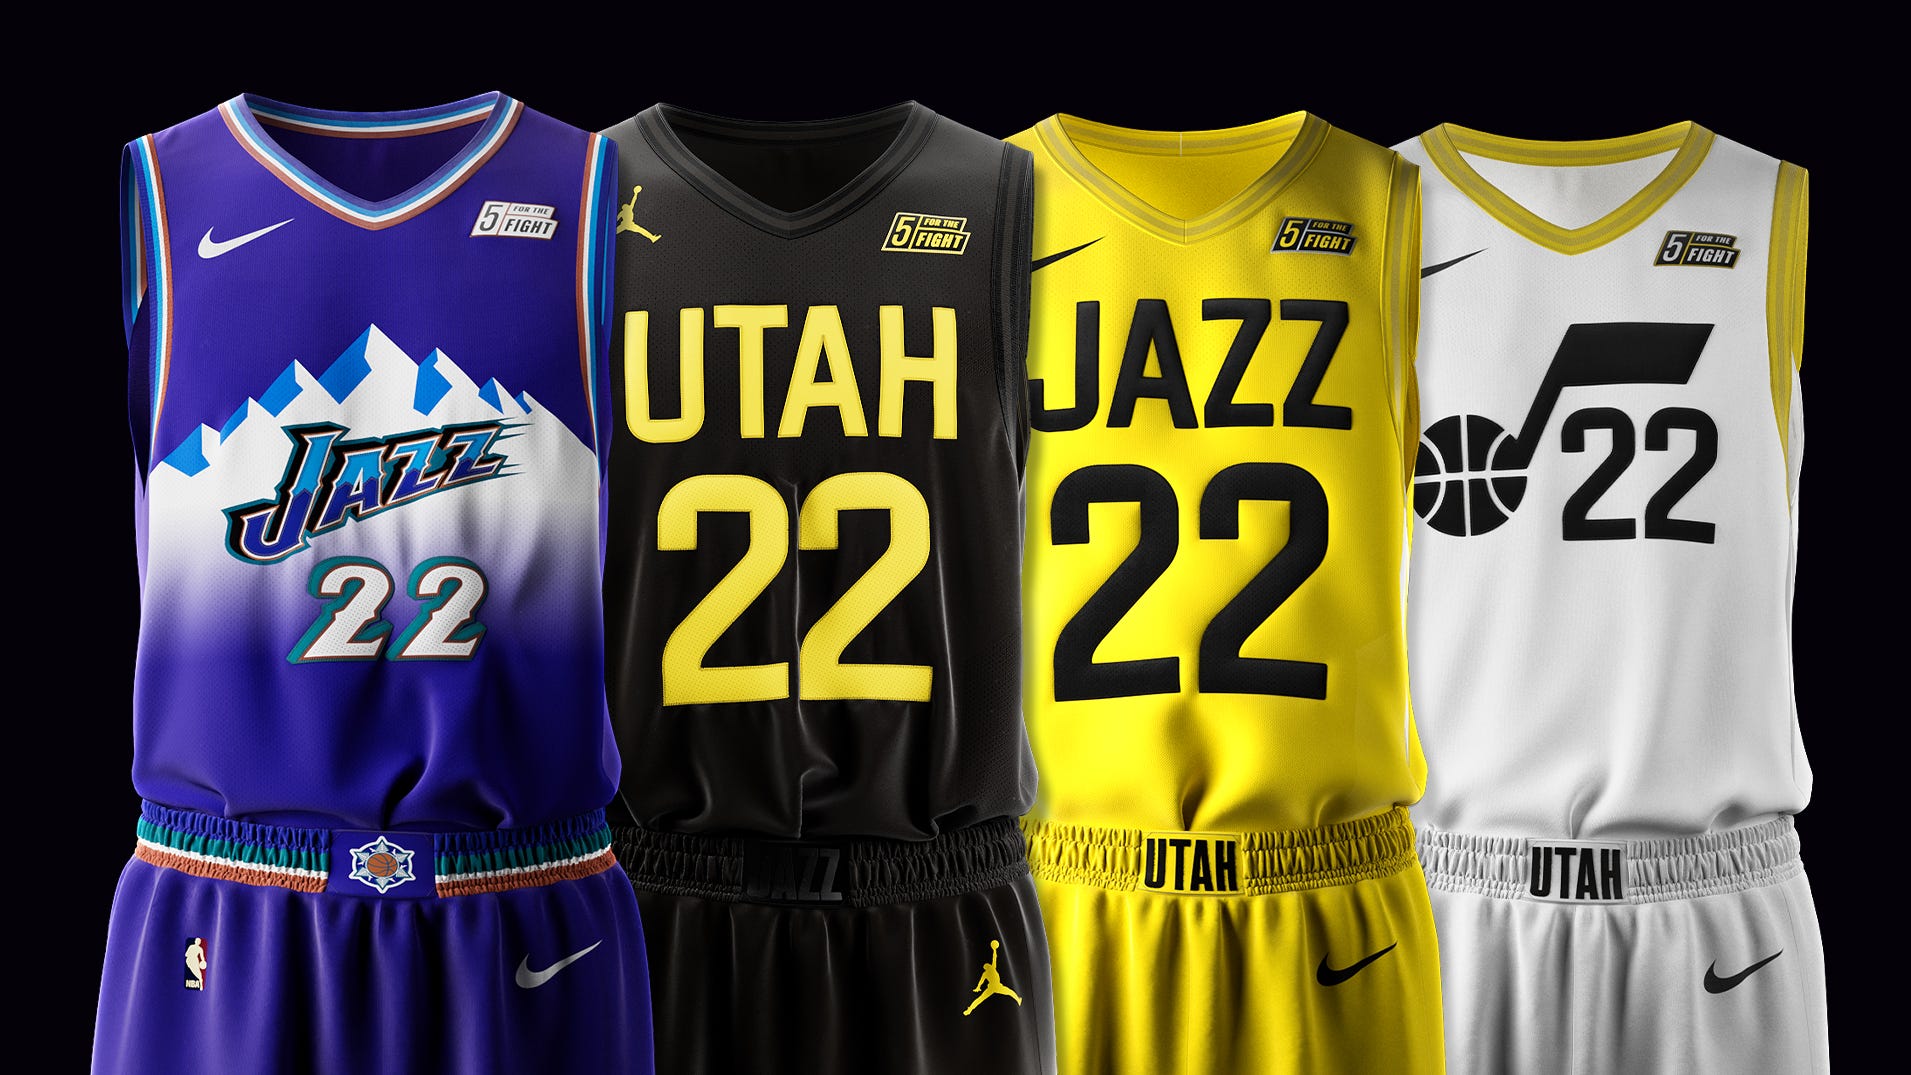 Utah Jazz uniforms 2022 Purple jerseys revealed by NBA team